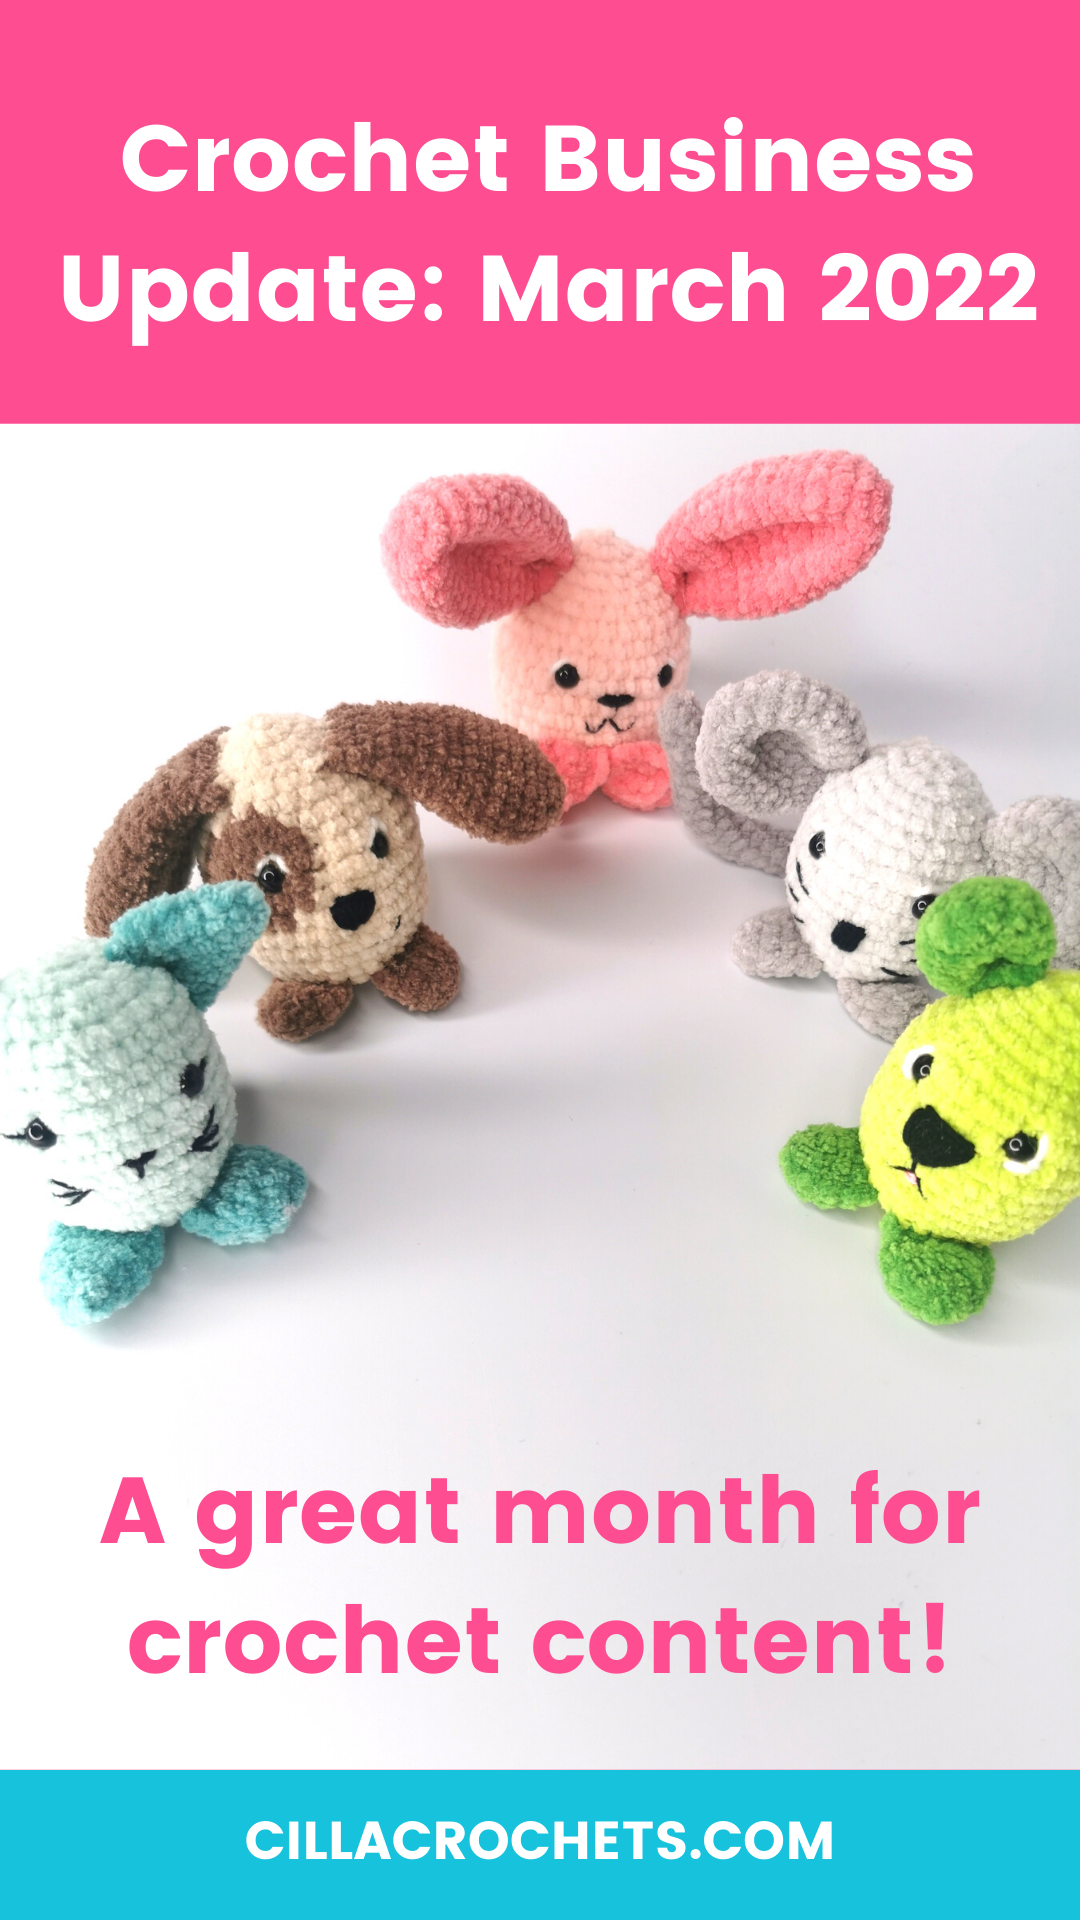 Crochet Business Website Views Skyrocket — Cilla Crochets